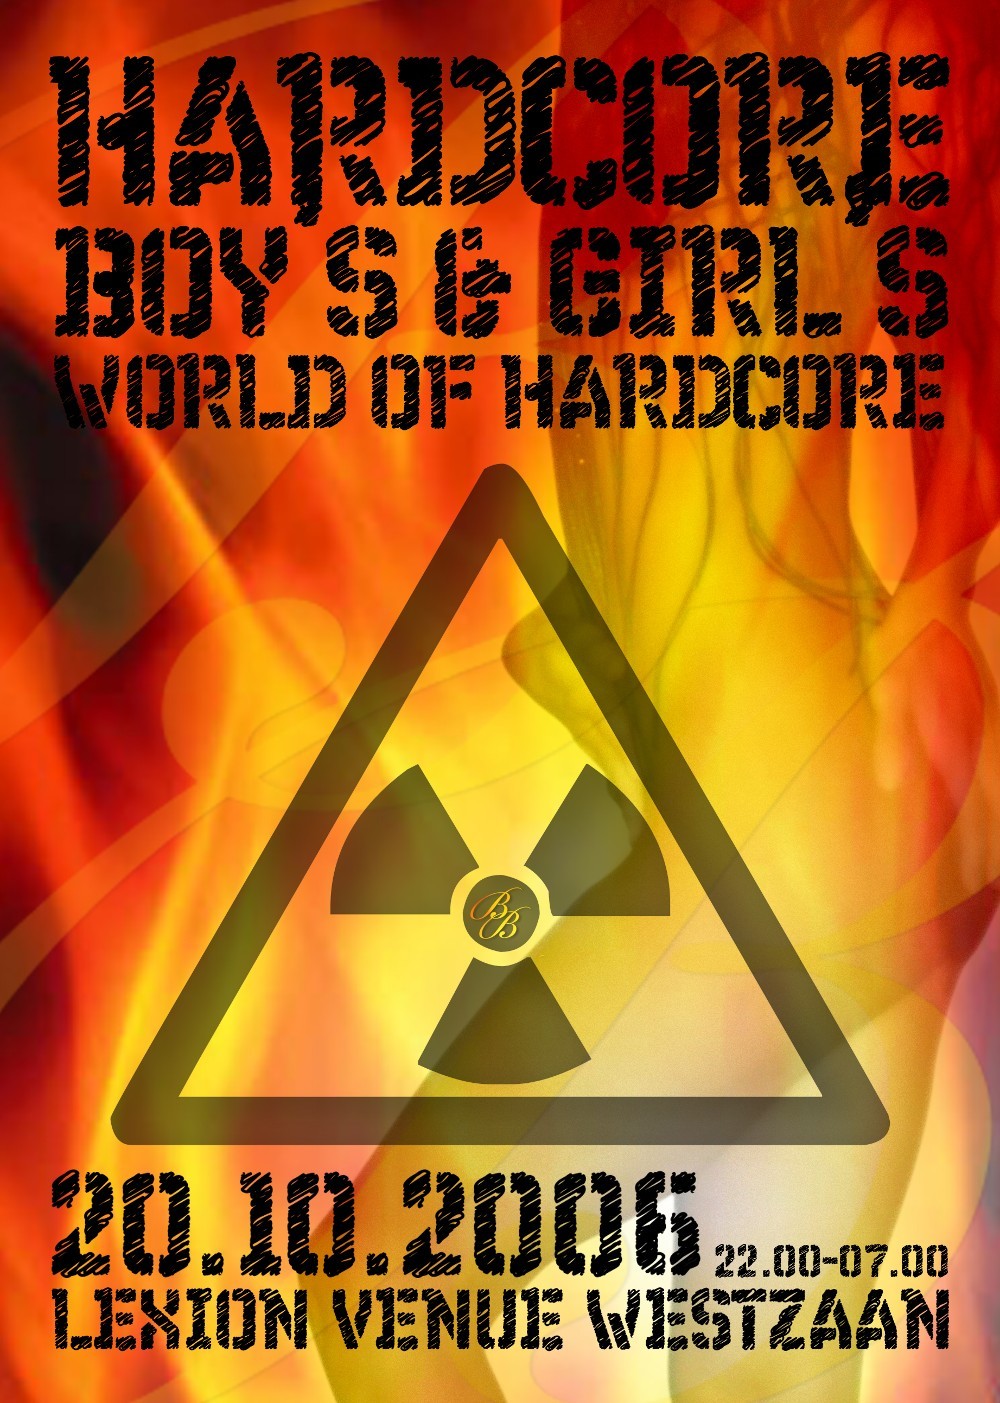 Hardcore boy's & girl's